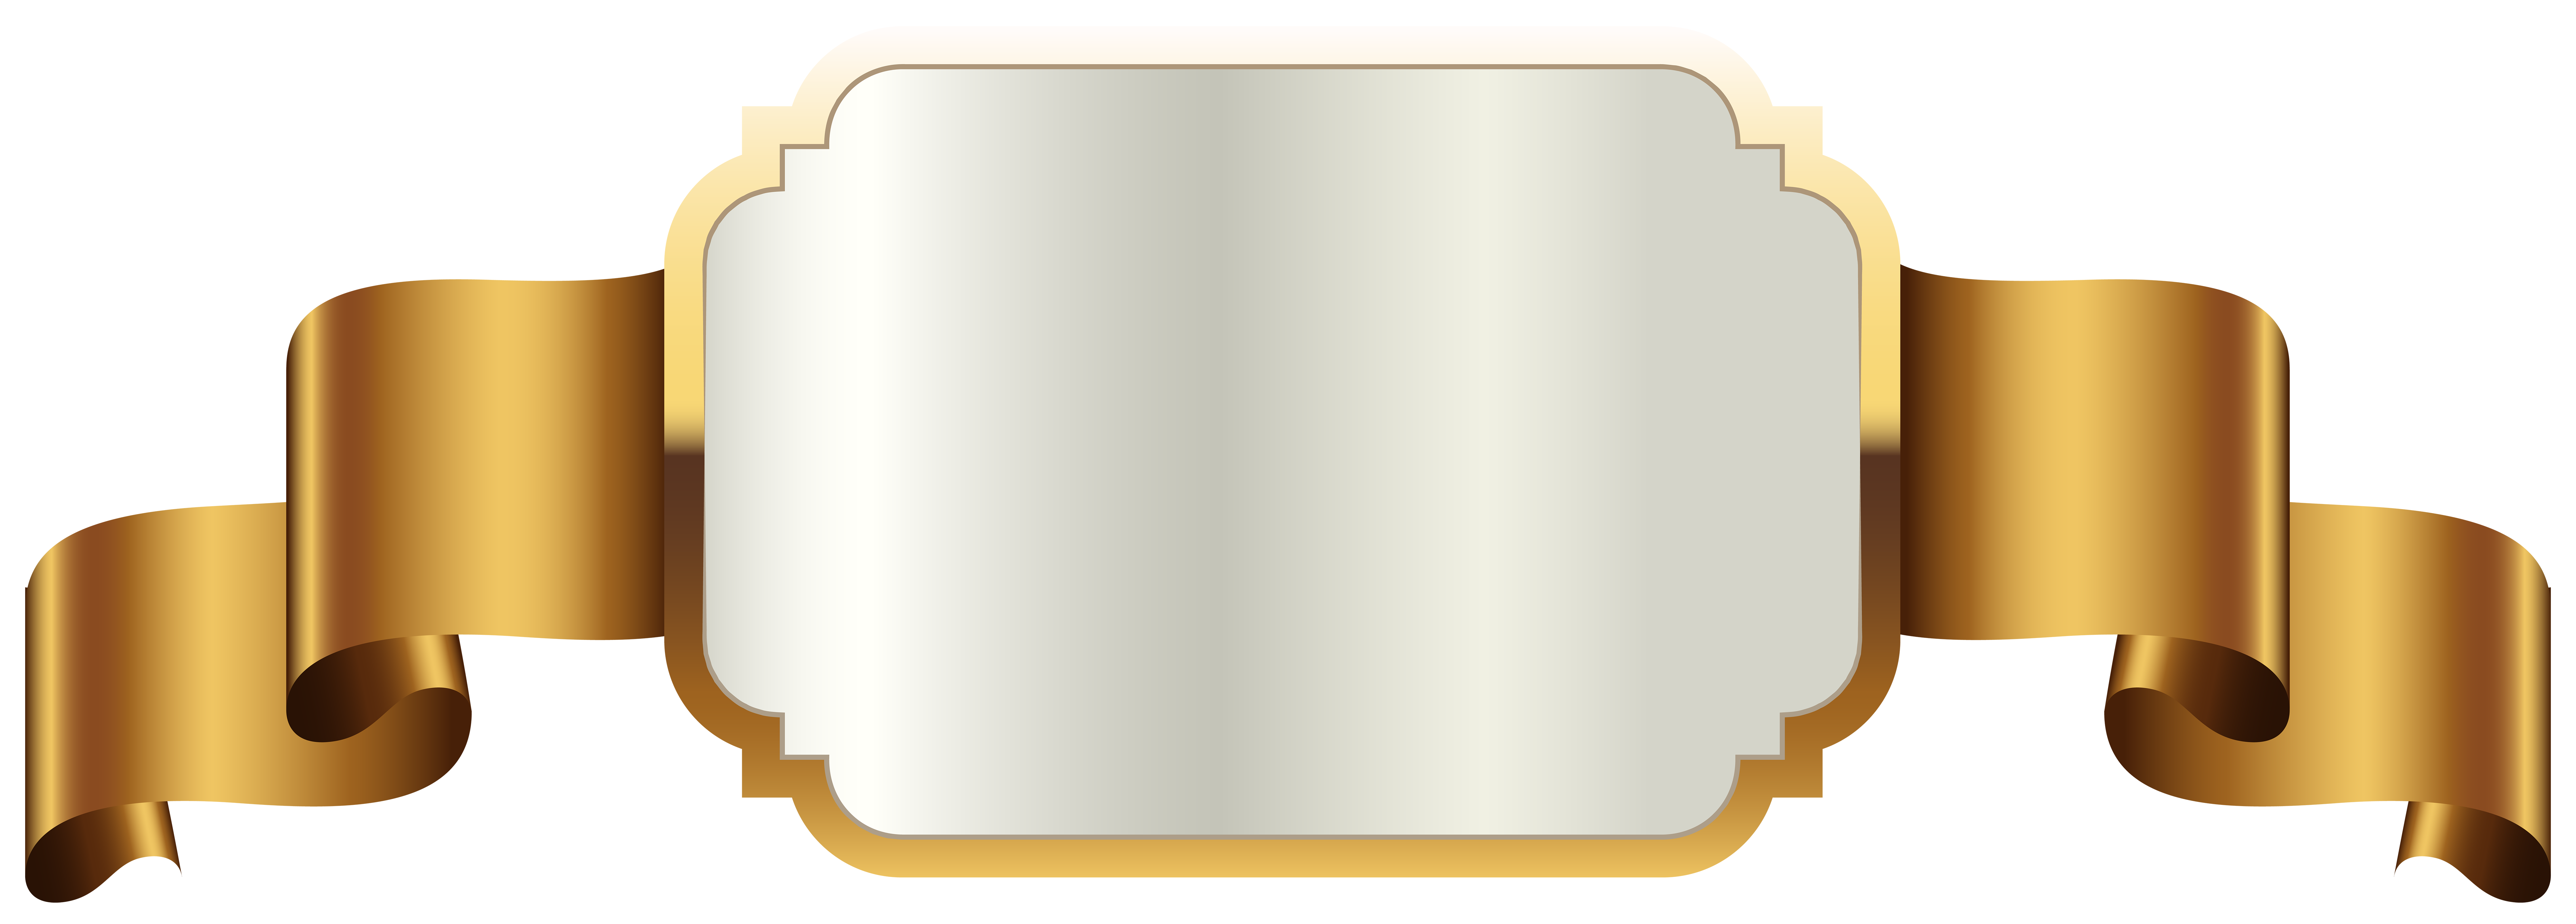 Gold Label Template Transparent PNG Clip Art Image